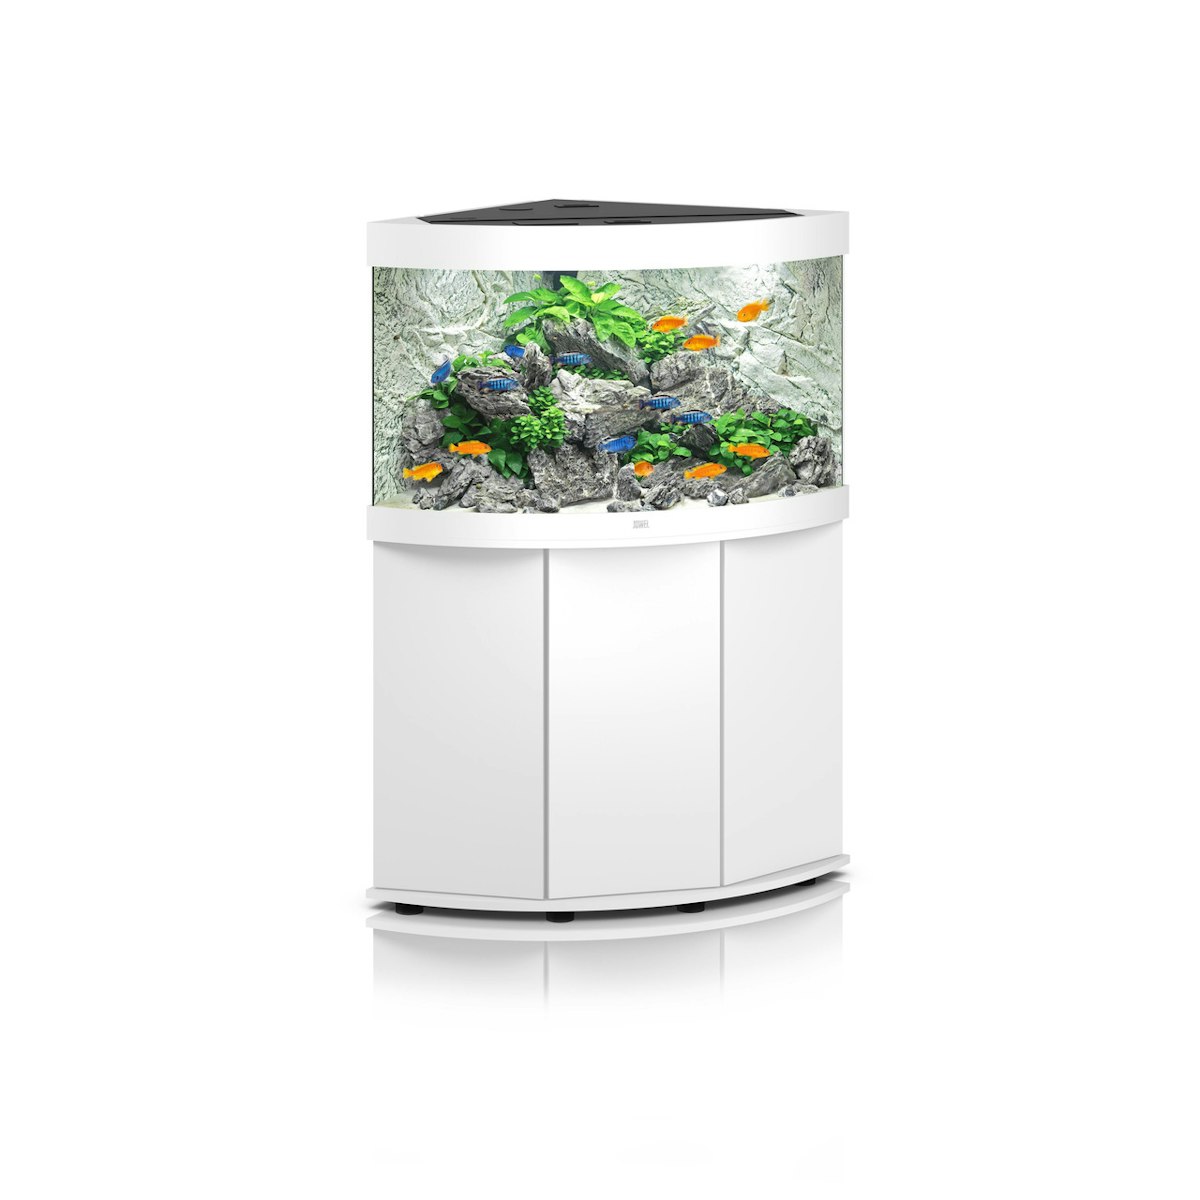 JUWEL Trigon 190 LED Aquarium mit Unterschrank weiß